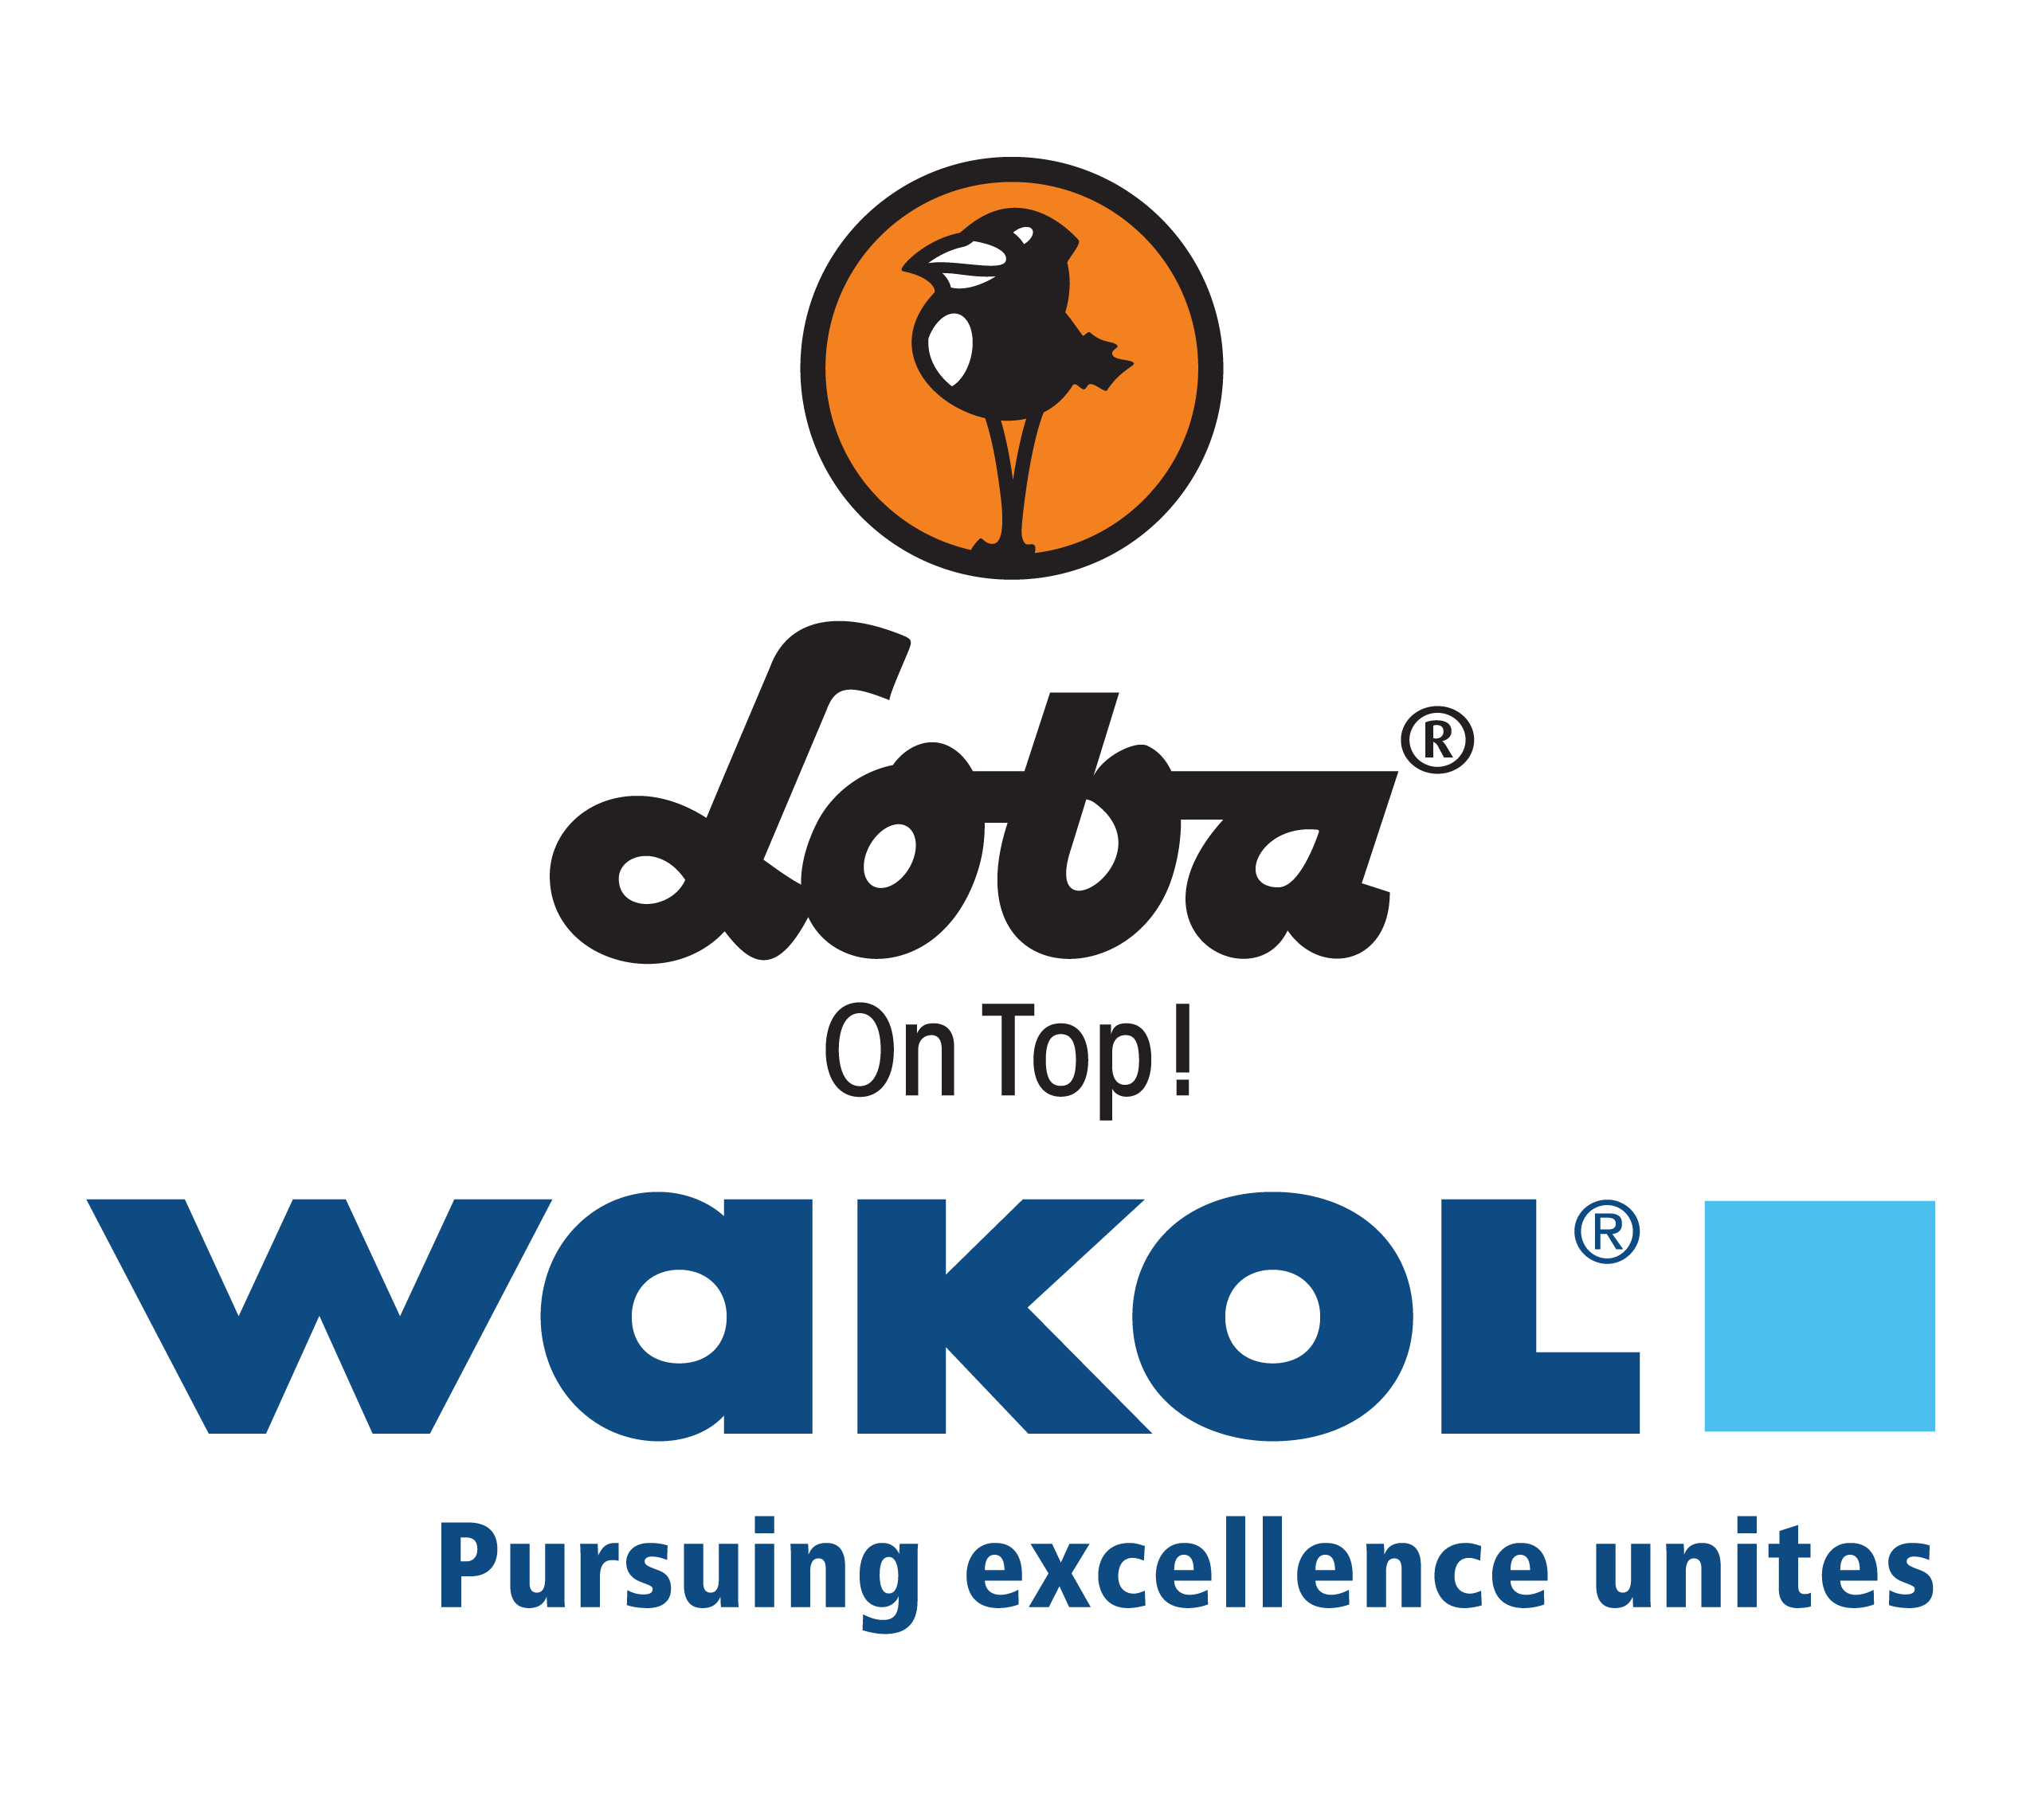 Loba Wakol is a 2023 Convention Sponsor